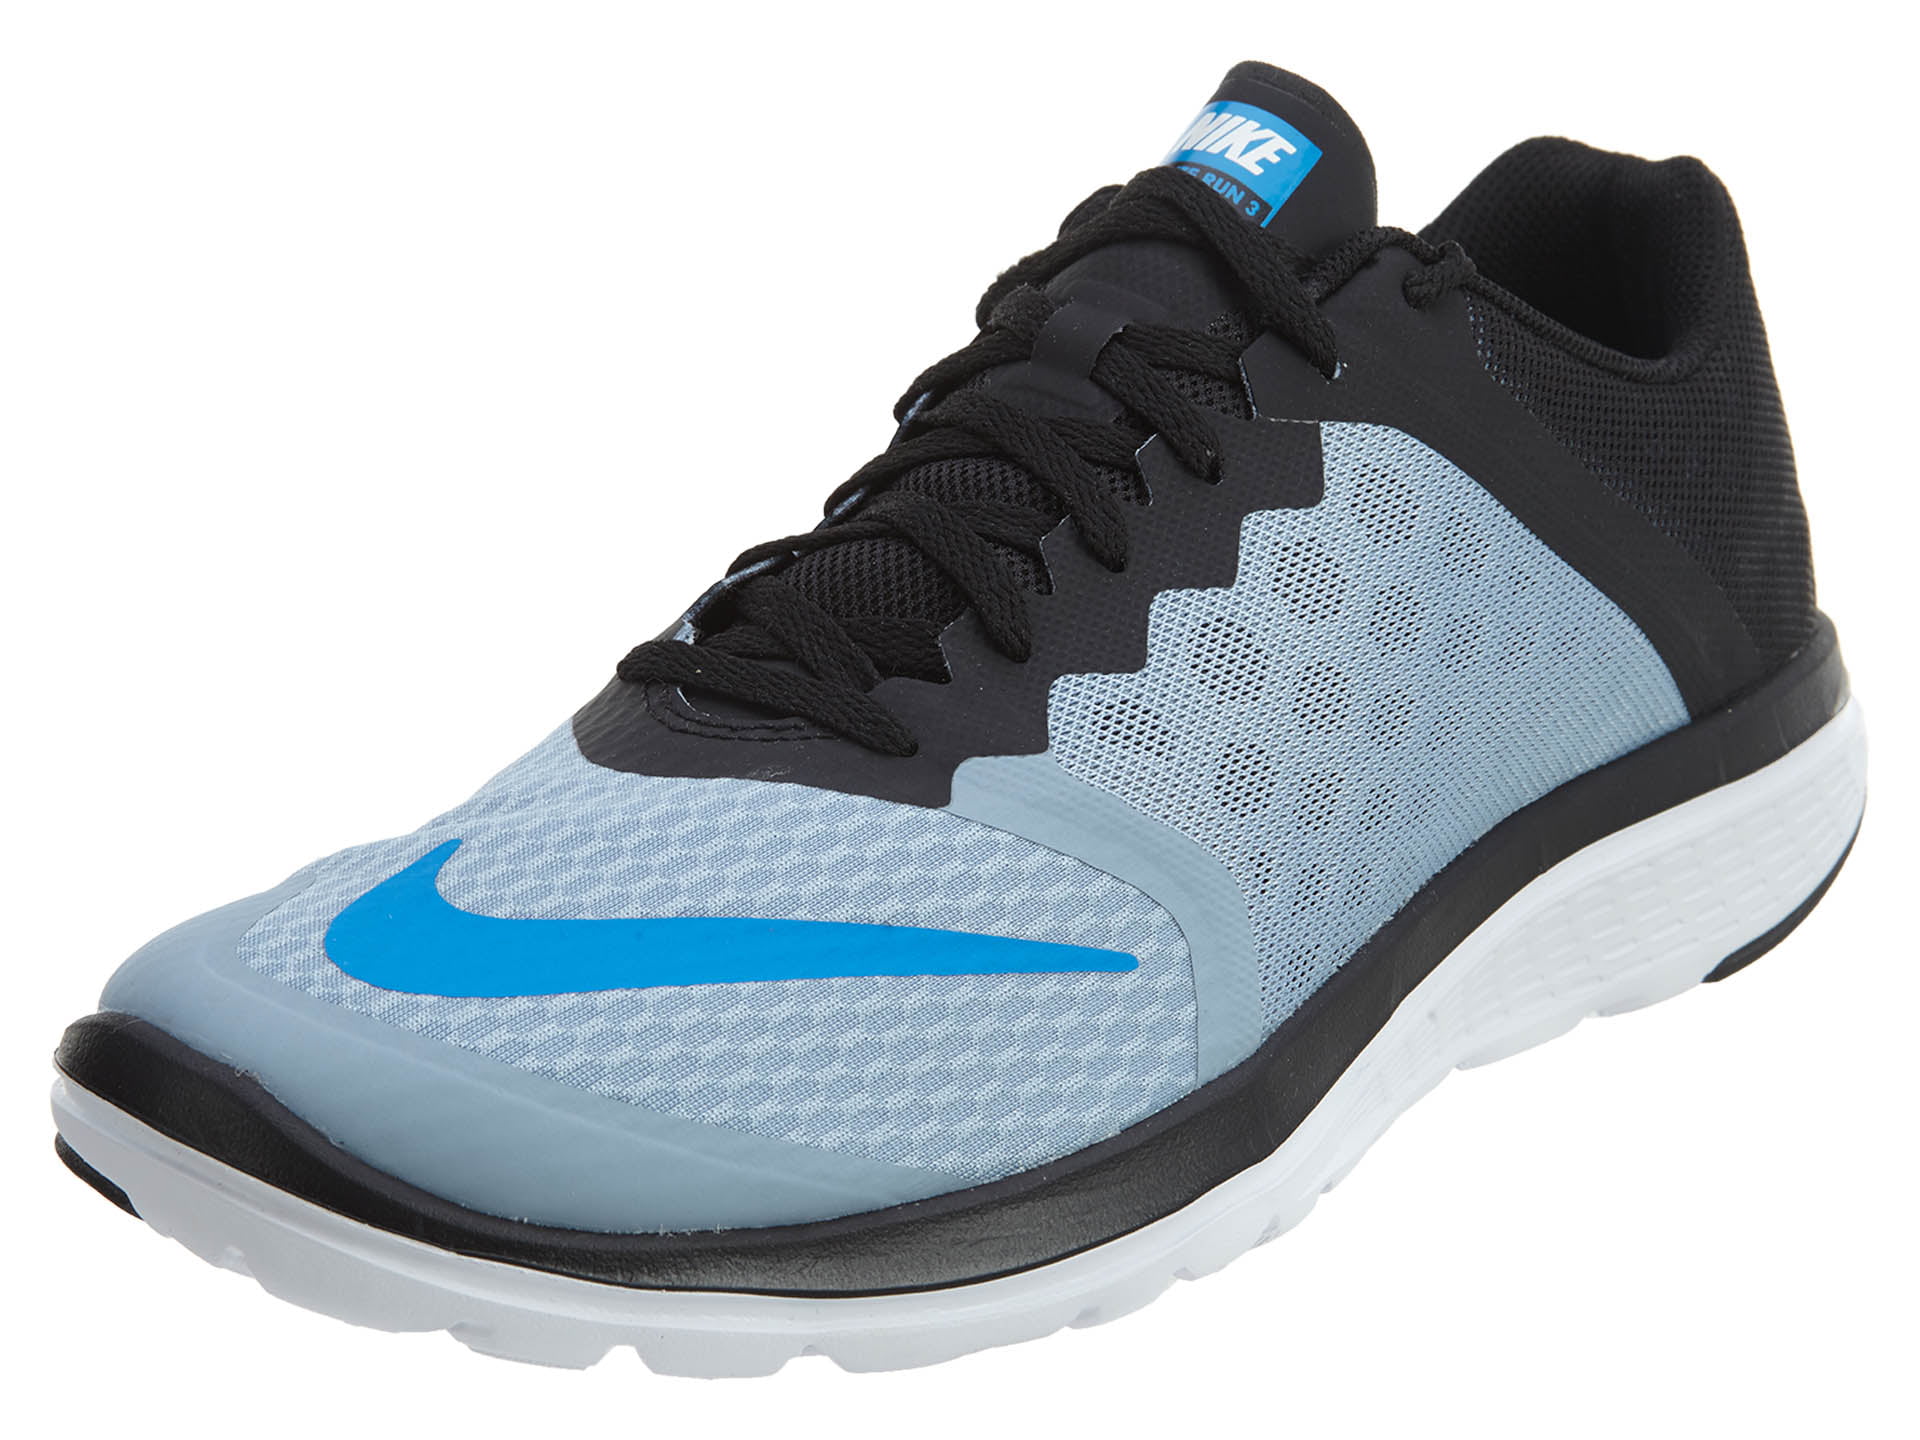 Nike - Nike Fs Lite Run 3 Mens Style : 807144 - Walmart.com - Walmart.com